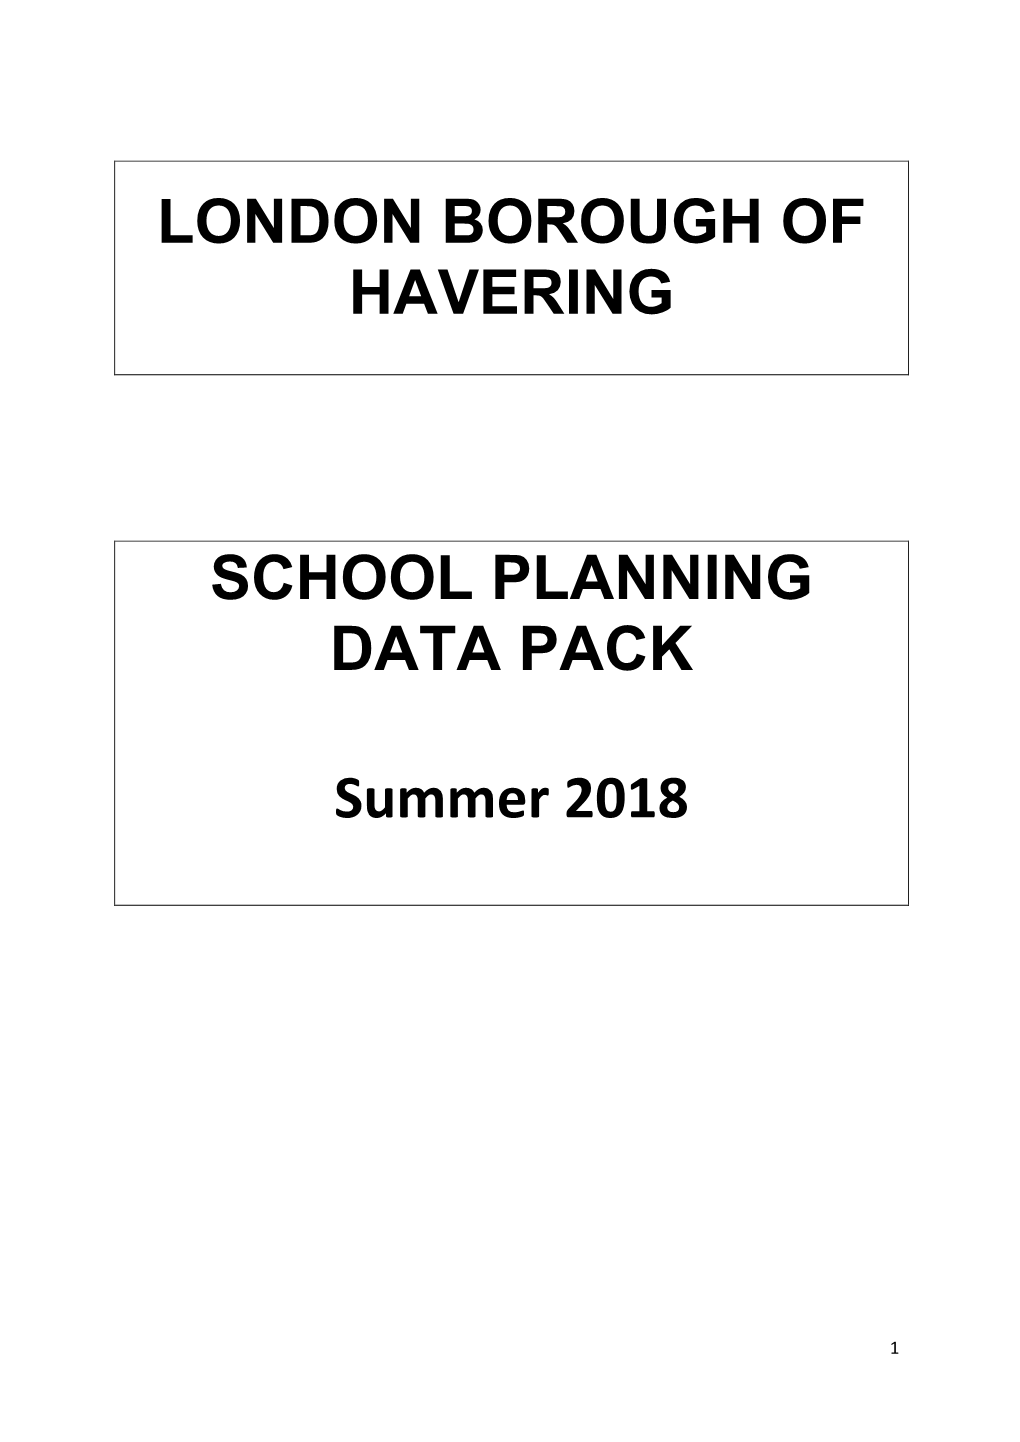 Download School Planning Data Pack Summer 2018